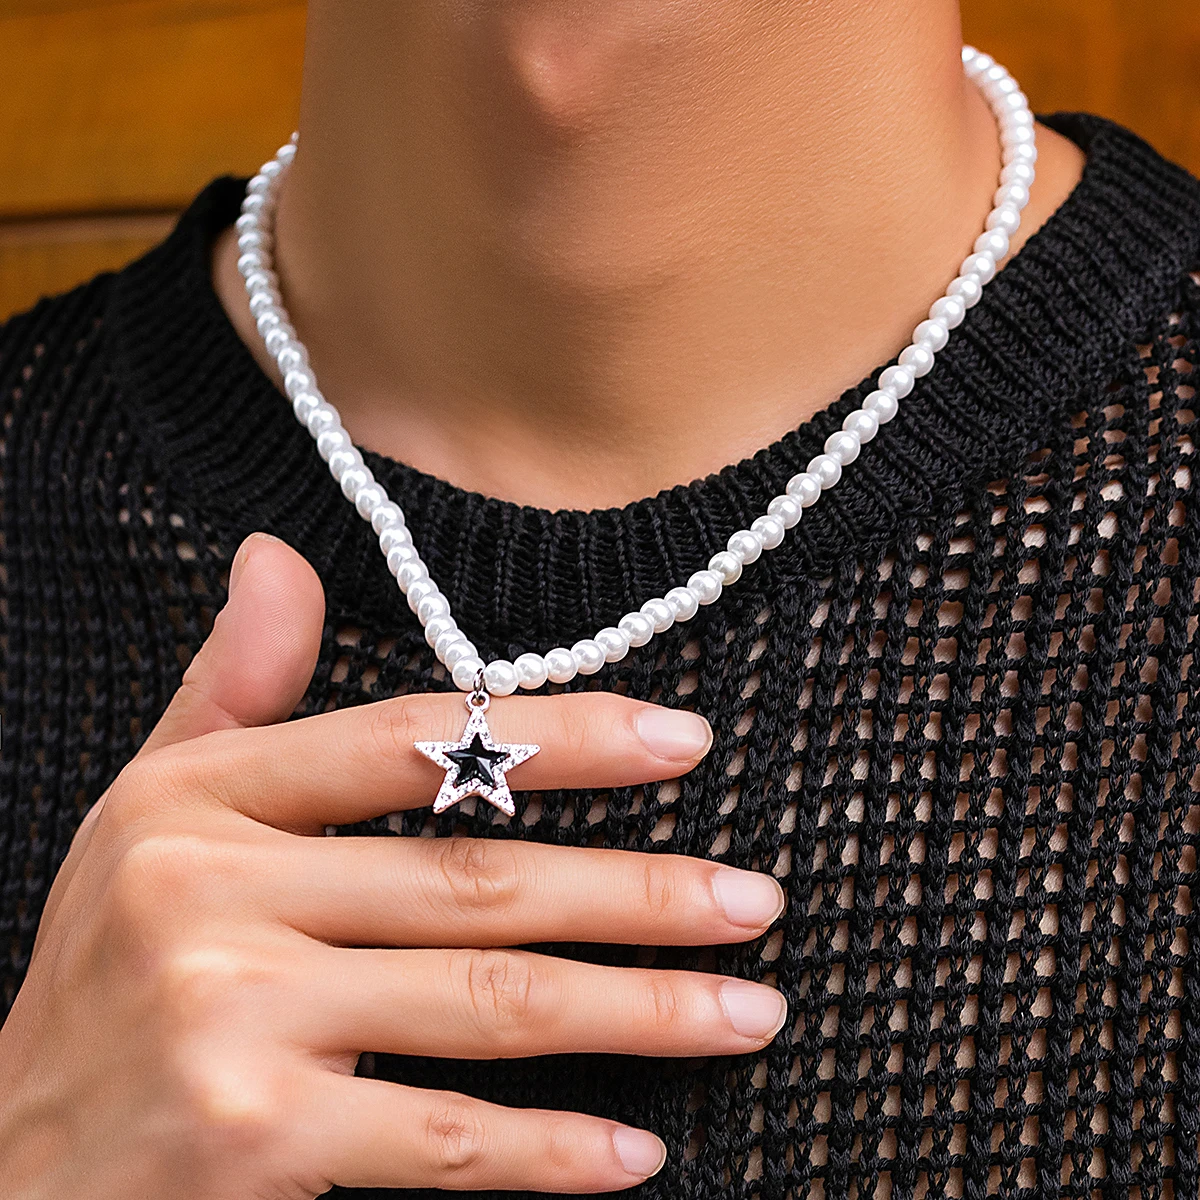 

Salircon Simple Handmade Imitation Pearl Beaded Short Necklace Men's Fashion Rhinestone Star Pendant Choker Punk Party Jewelry